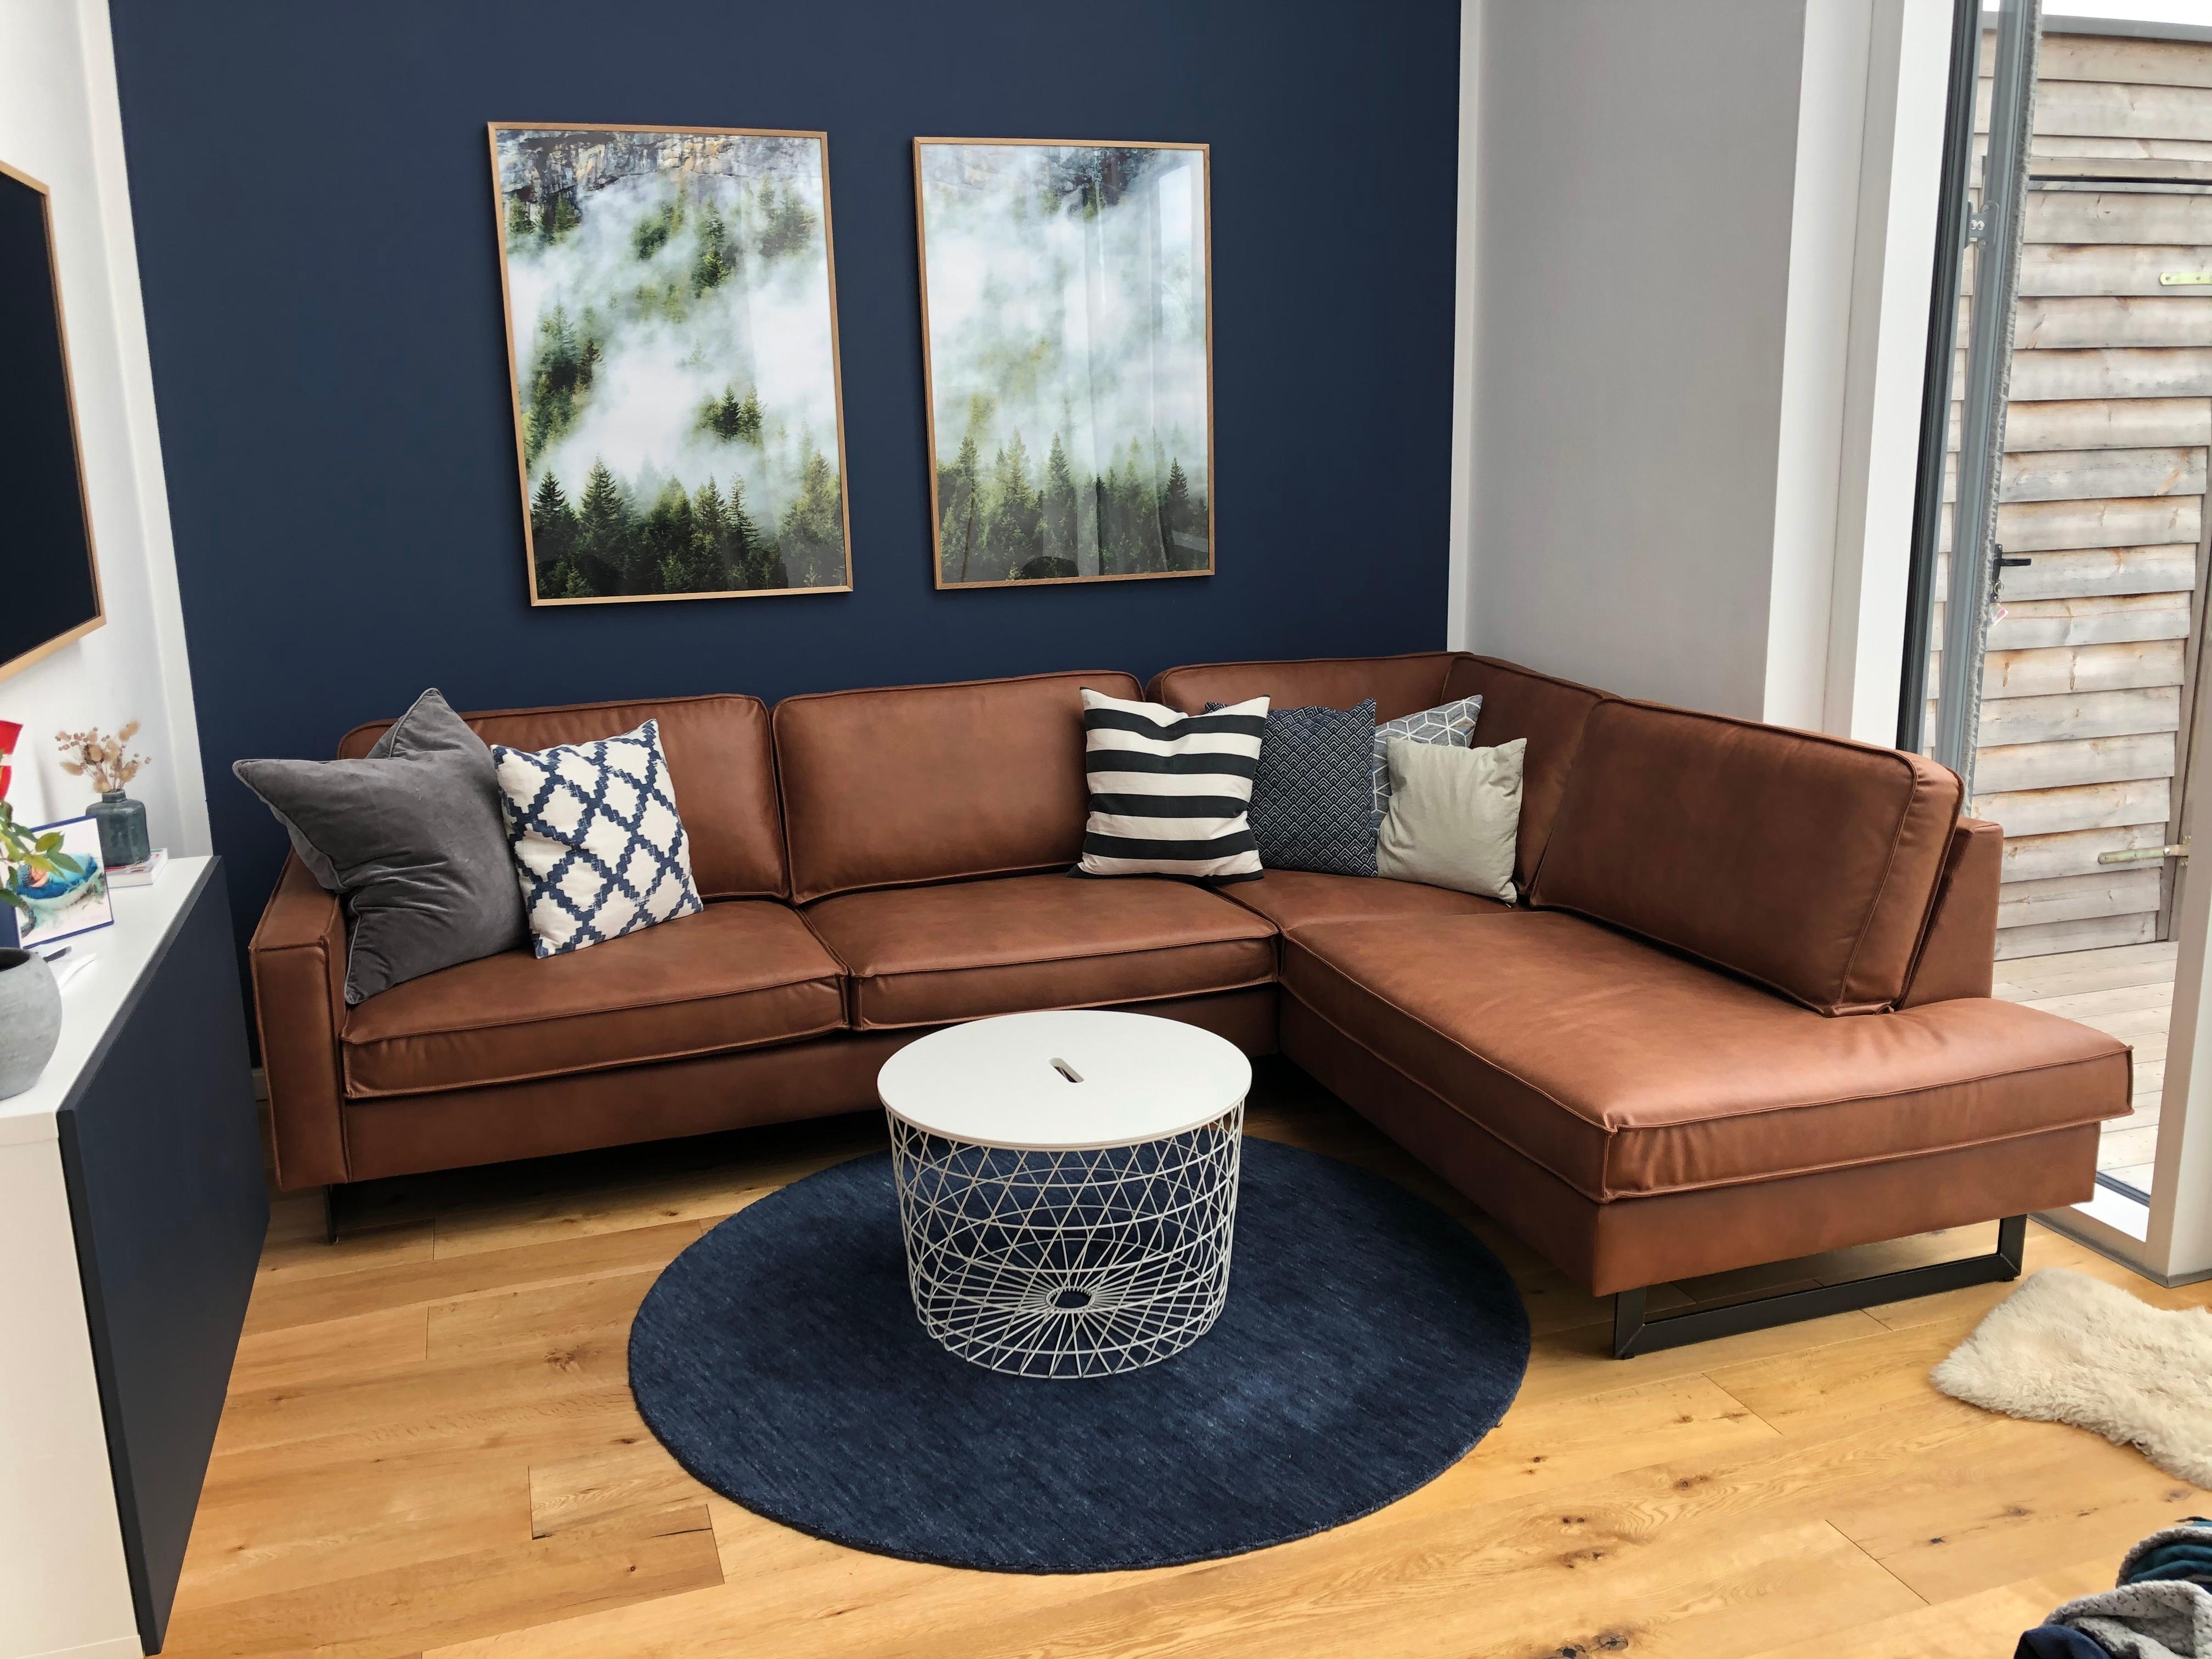 Unsere neue Couch 🛋 
#neuesSofa #cognacfarbend #ecksofa